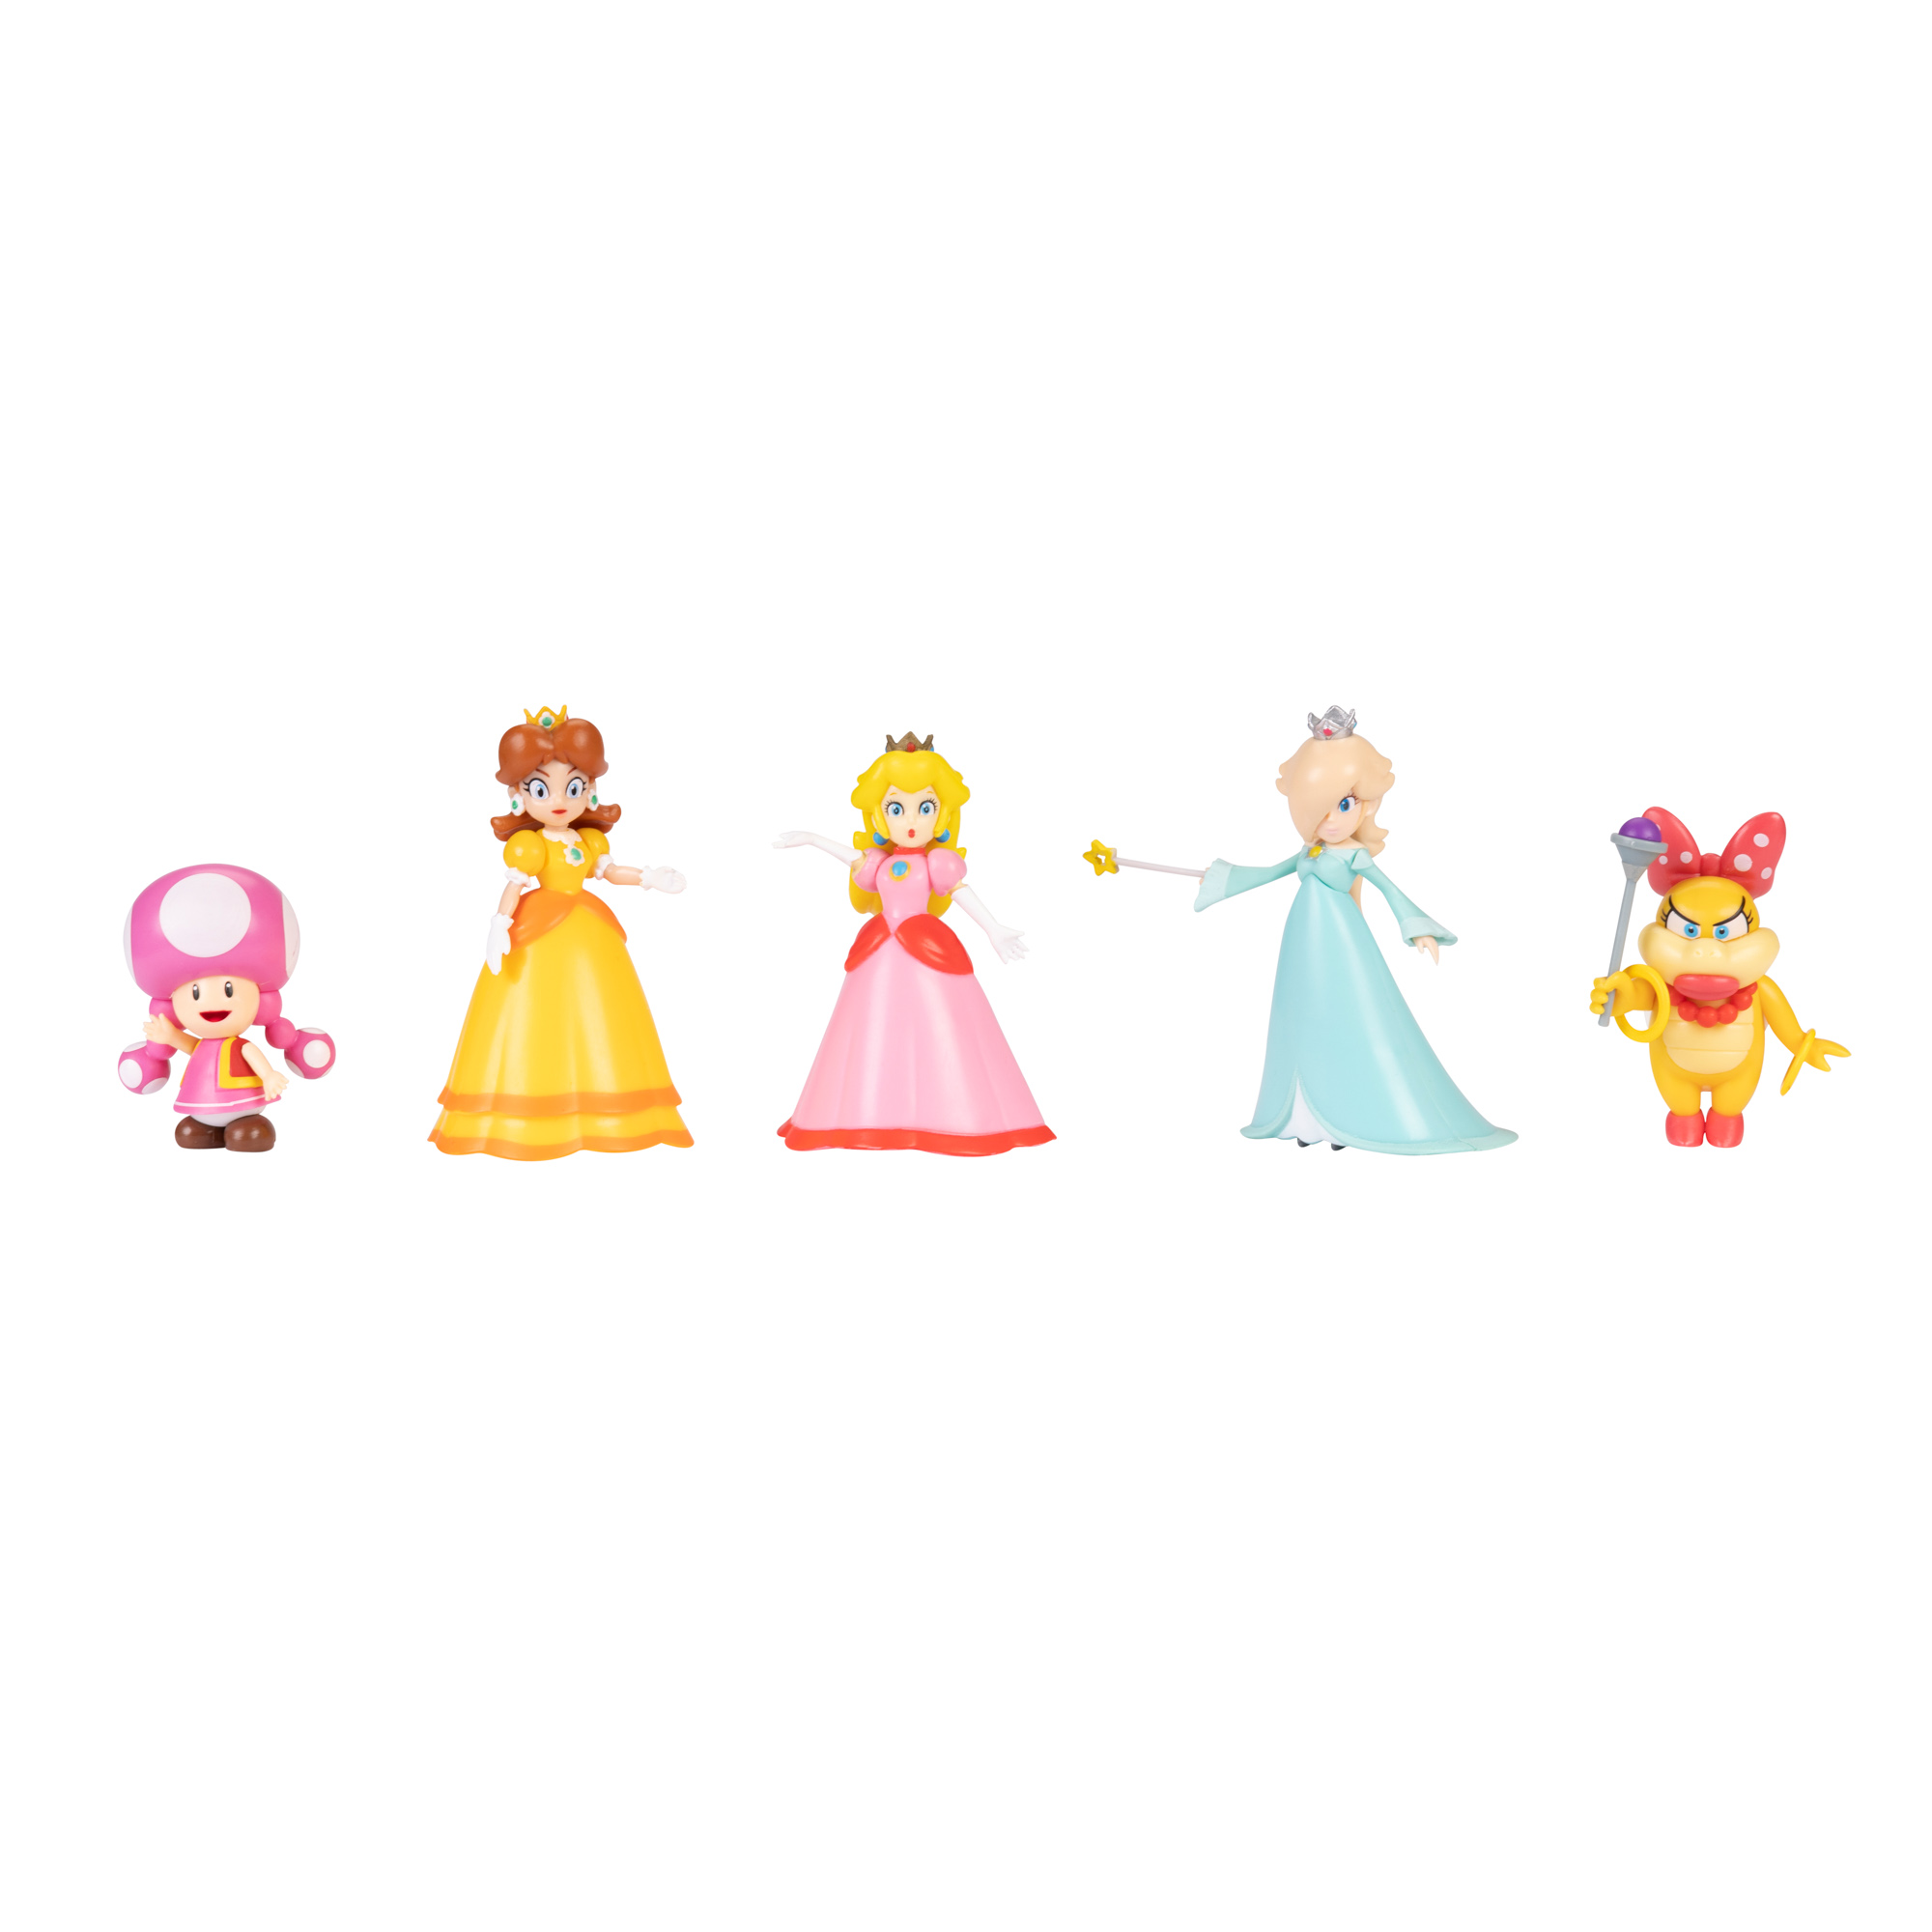 Nintendo mehrfarbig Friends Spielfigur Figuren Mario Set cm & 5er SUPER 6,5 Pack, MARIO Peach Super